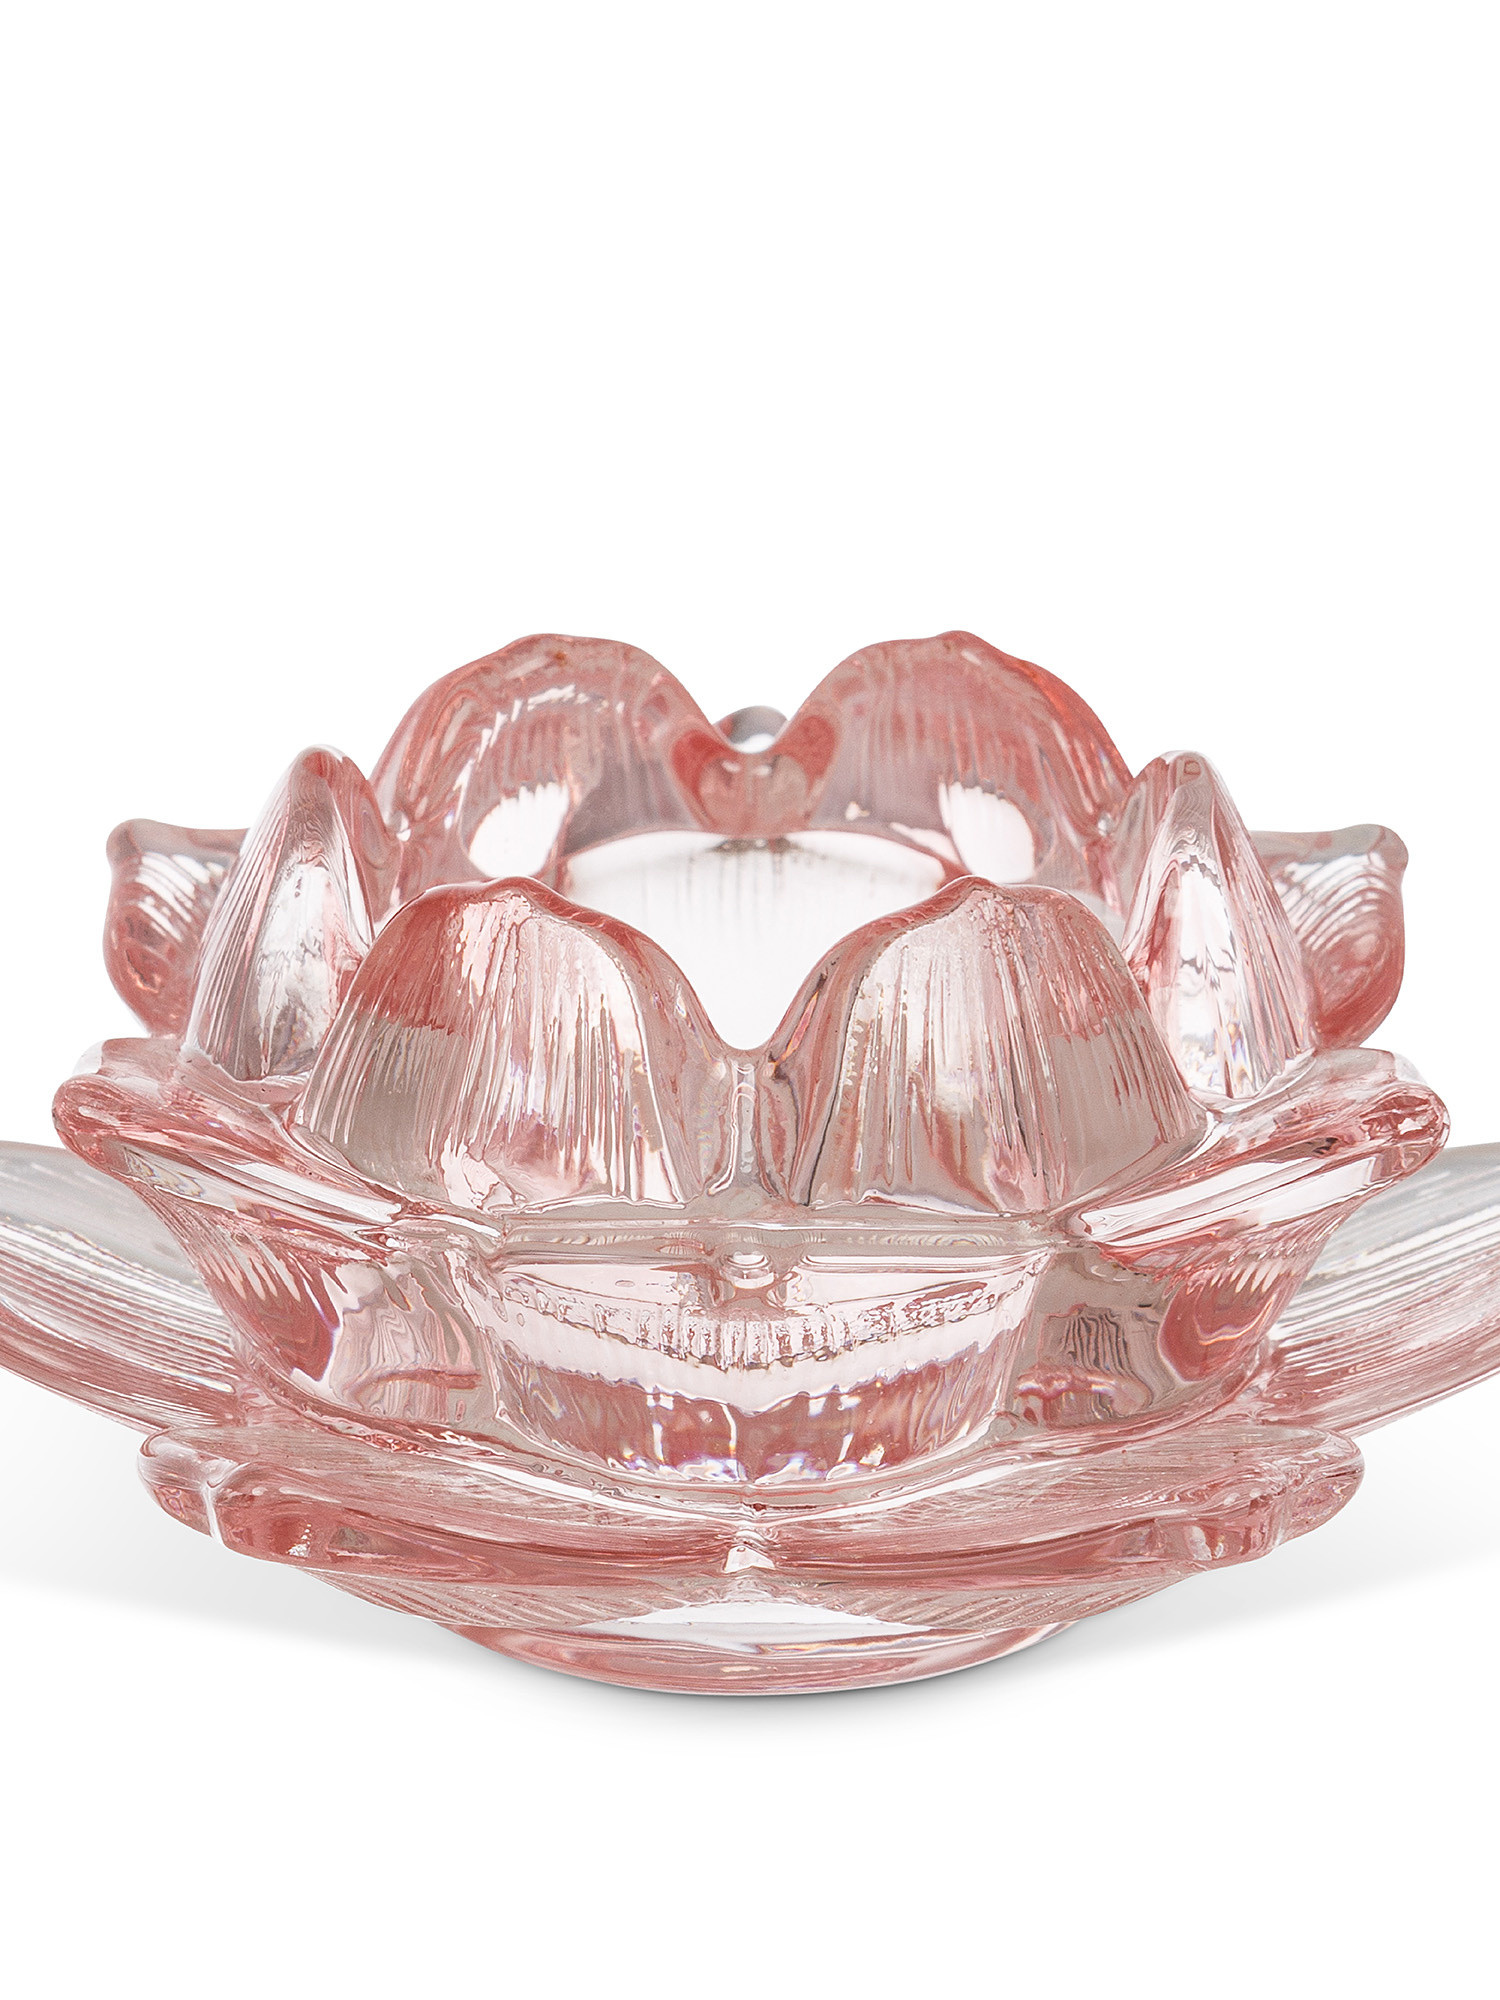 Lotus flower glass candle holder, Pink, large image number 1